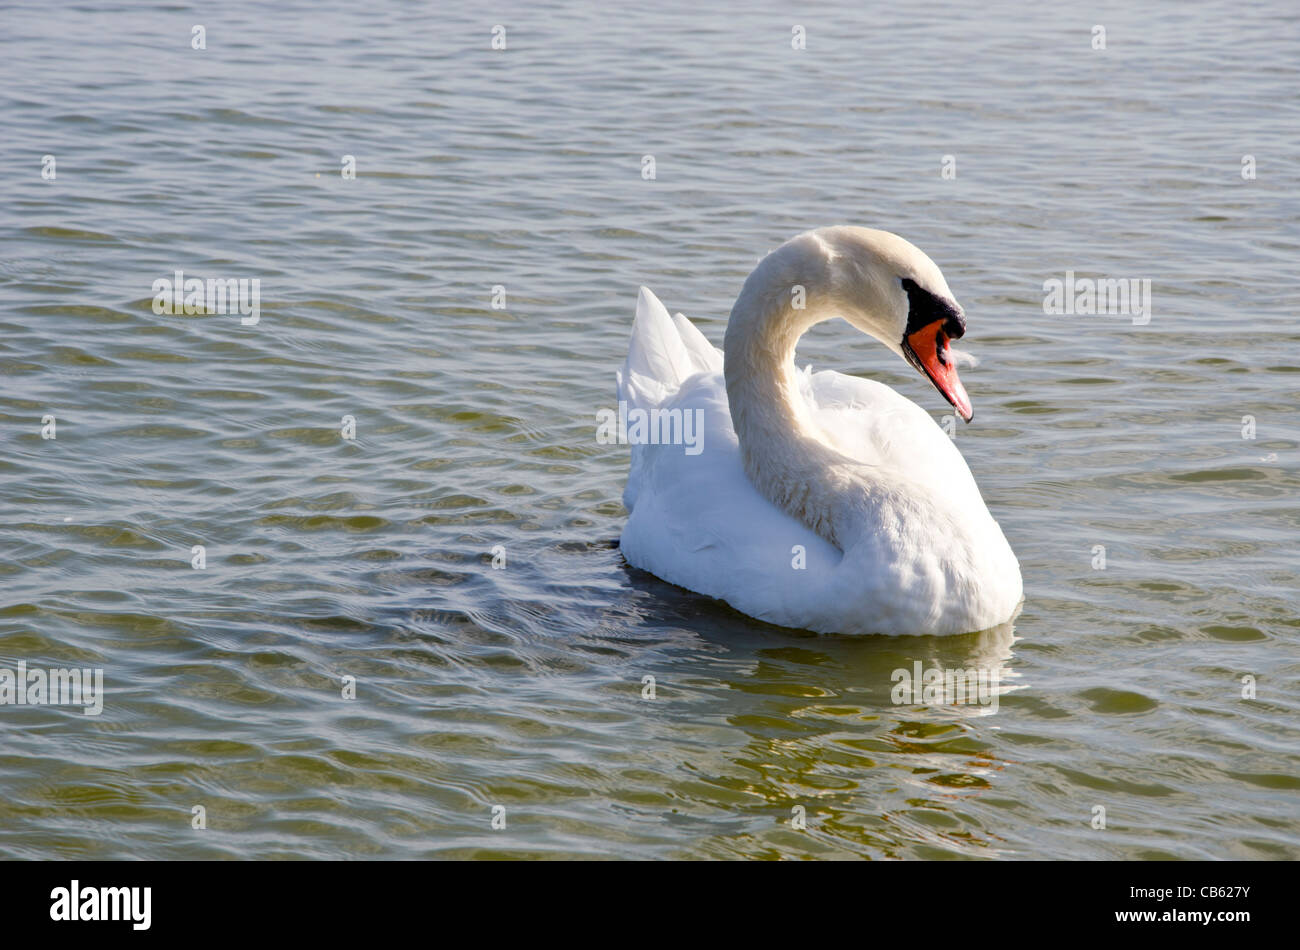 Swan floating on water. Free bird closeup. Wild lake view. Stock Photo